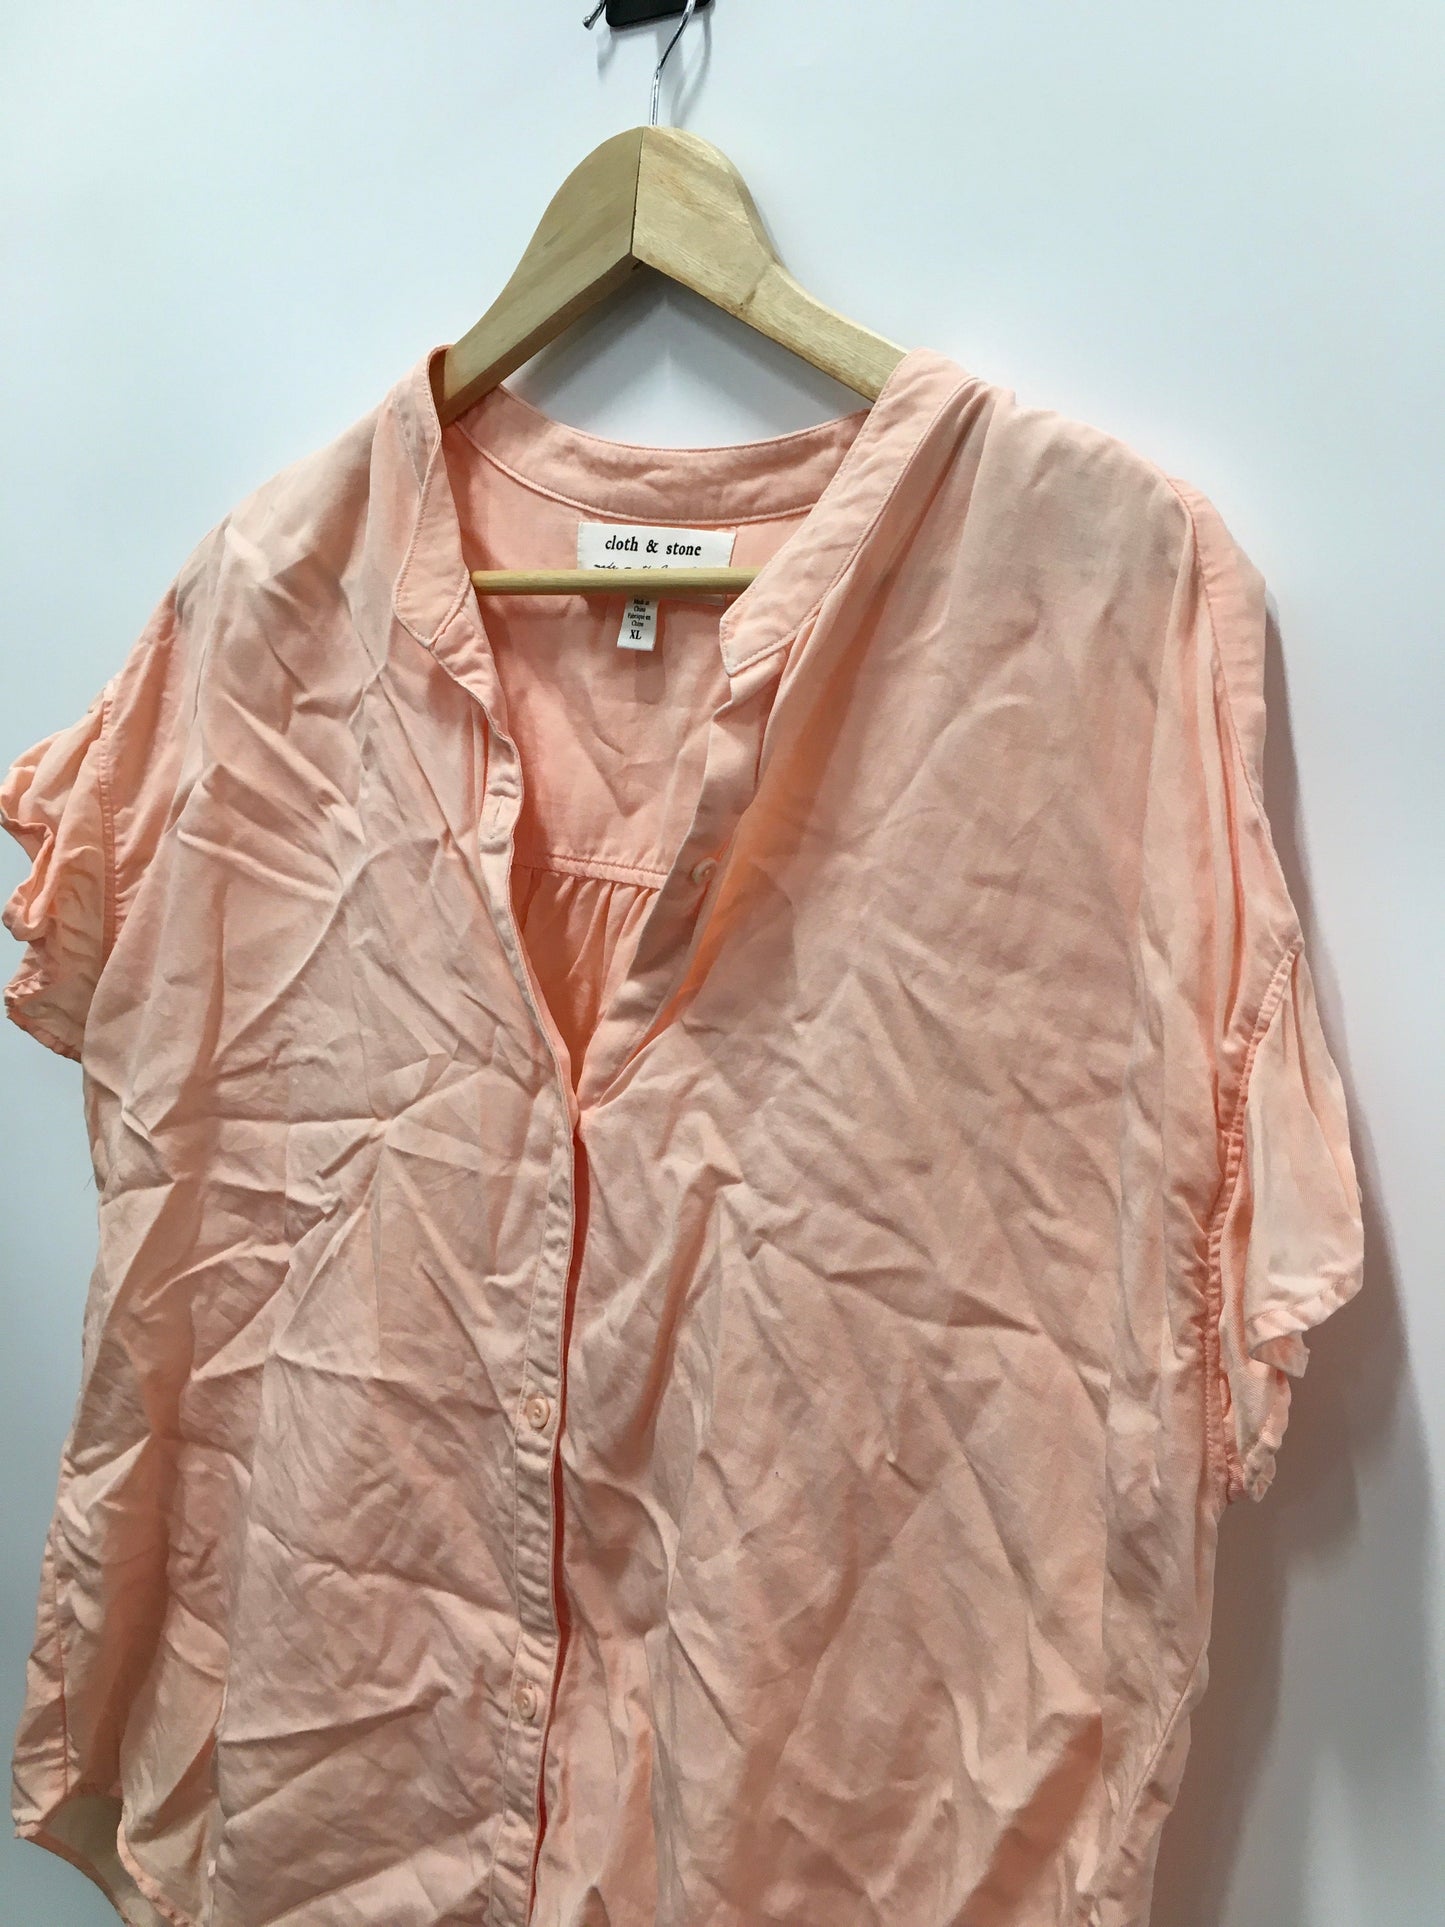 Peach Top Short Sleeve Cloth & Stone, Size Xl